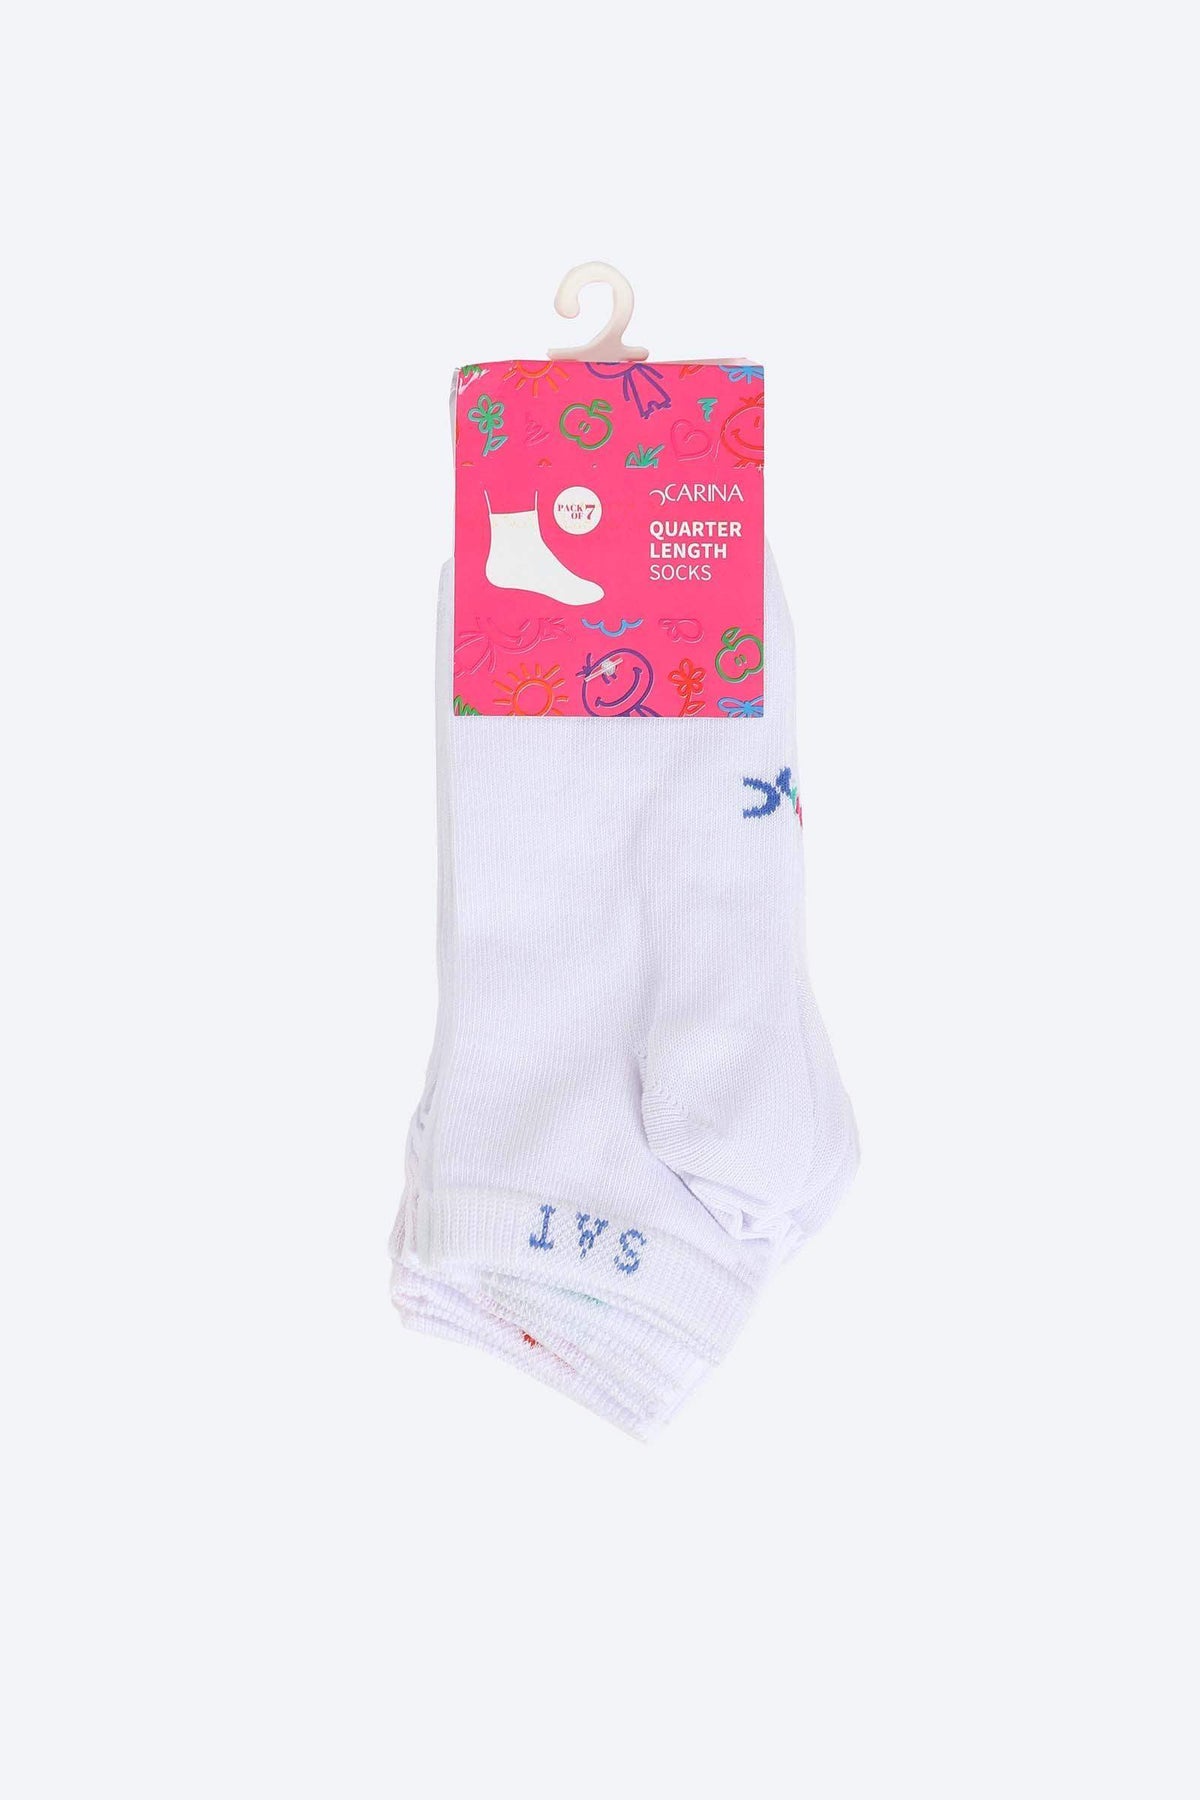 Girly Quarter Length Socks - 7 Pairs - Carina - كارينا